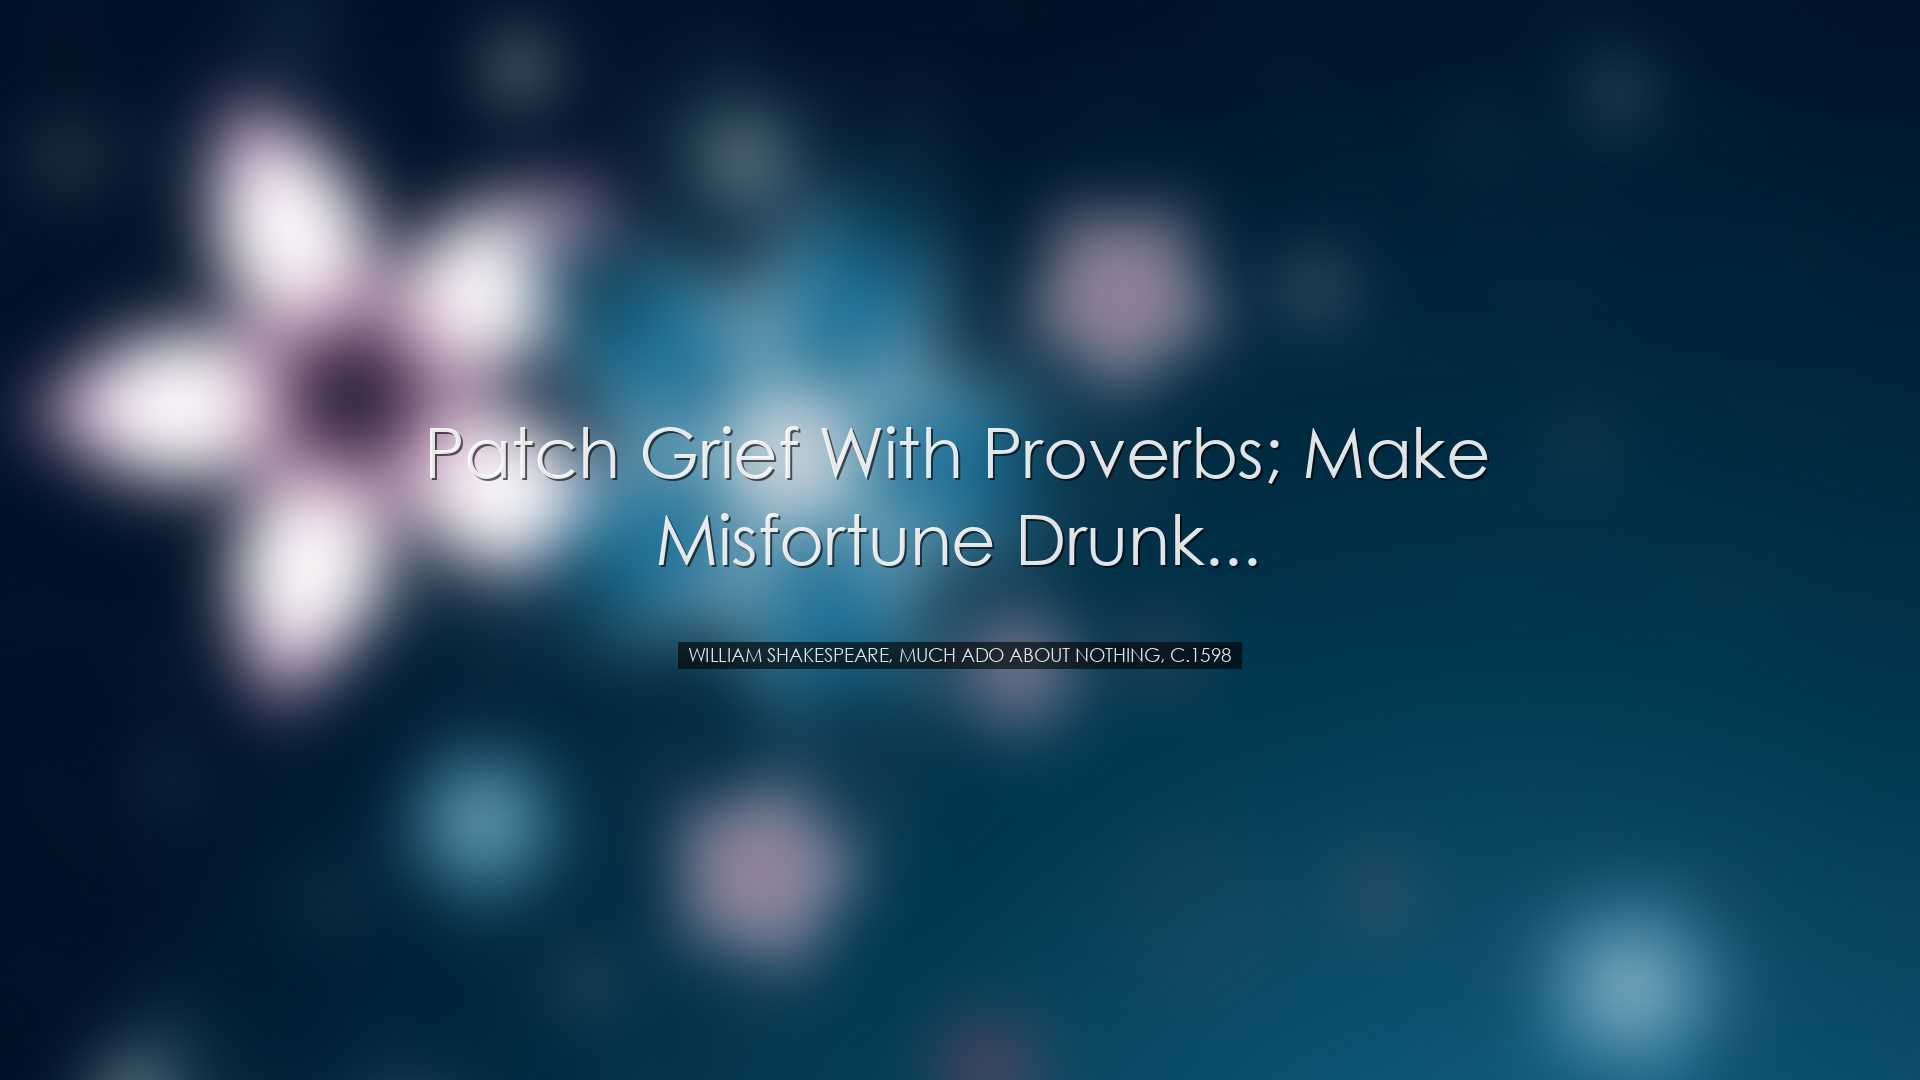 Patch grief with proverbs; make misfortune drunk... - William Shak